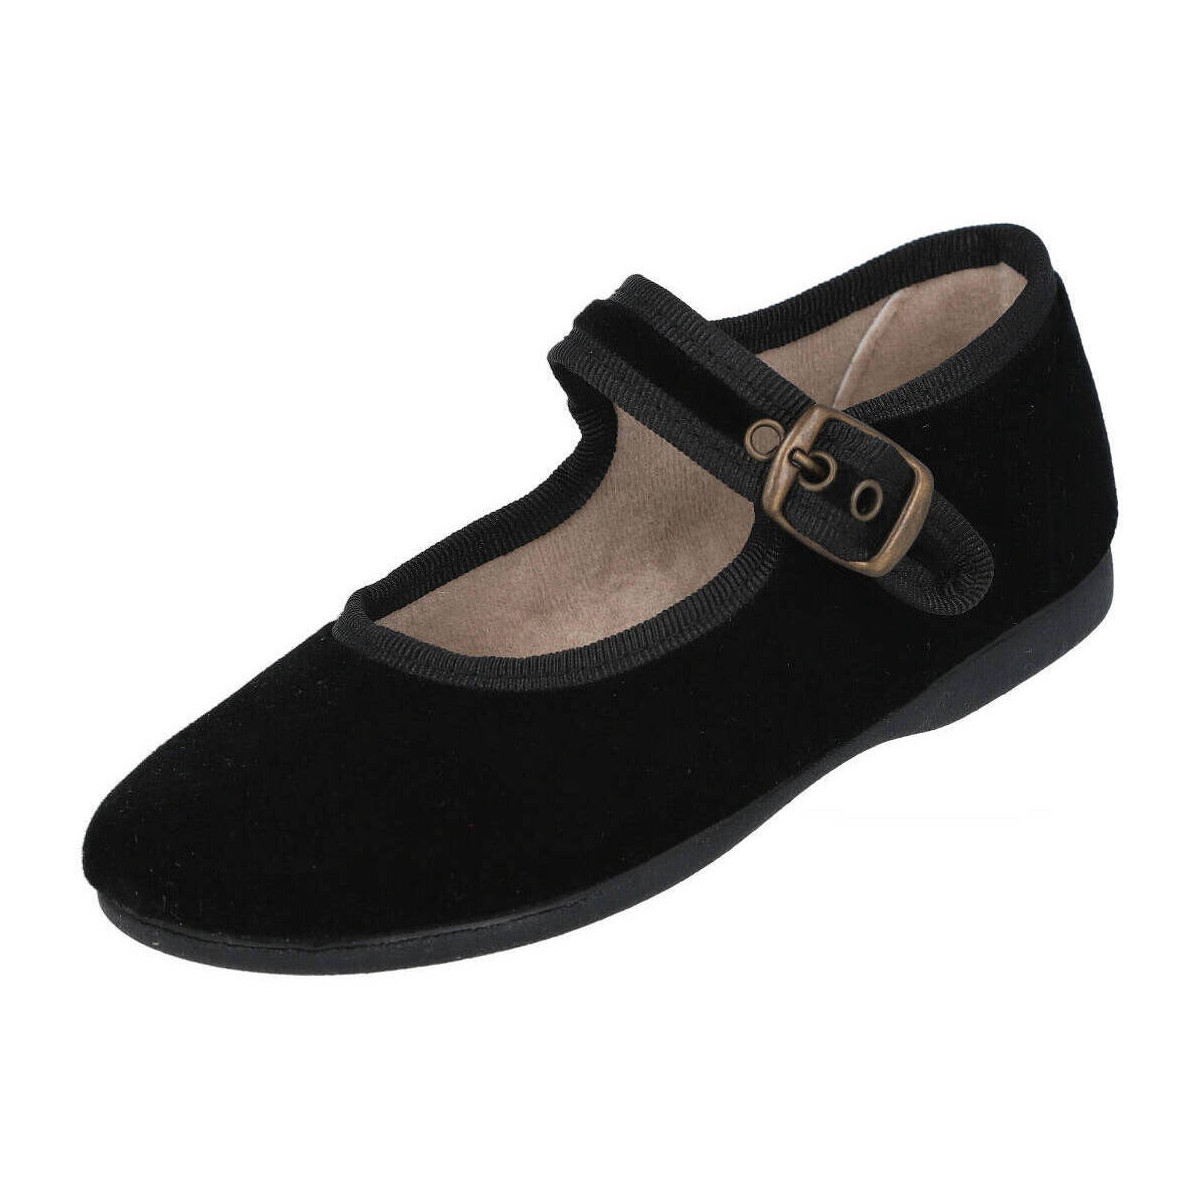 Zapatos Niña Bailarinas-manoletinas L&R Shoes MD800-T Negro